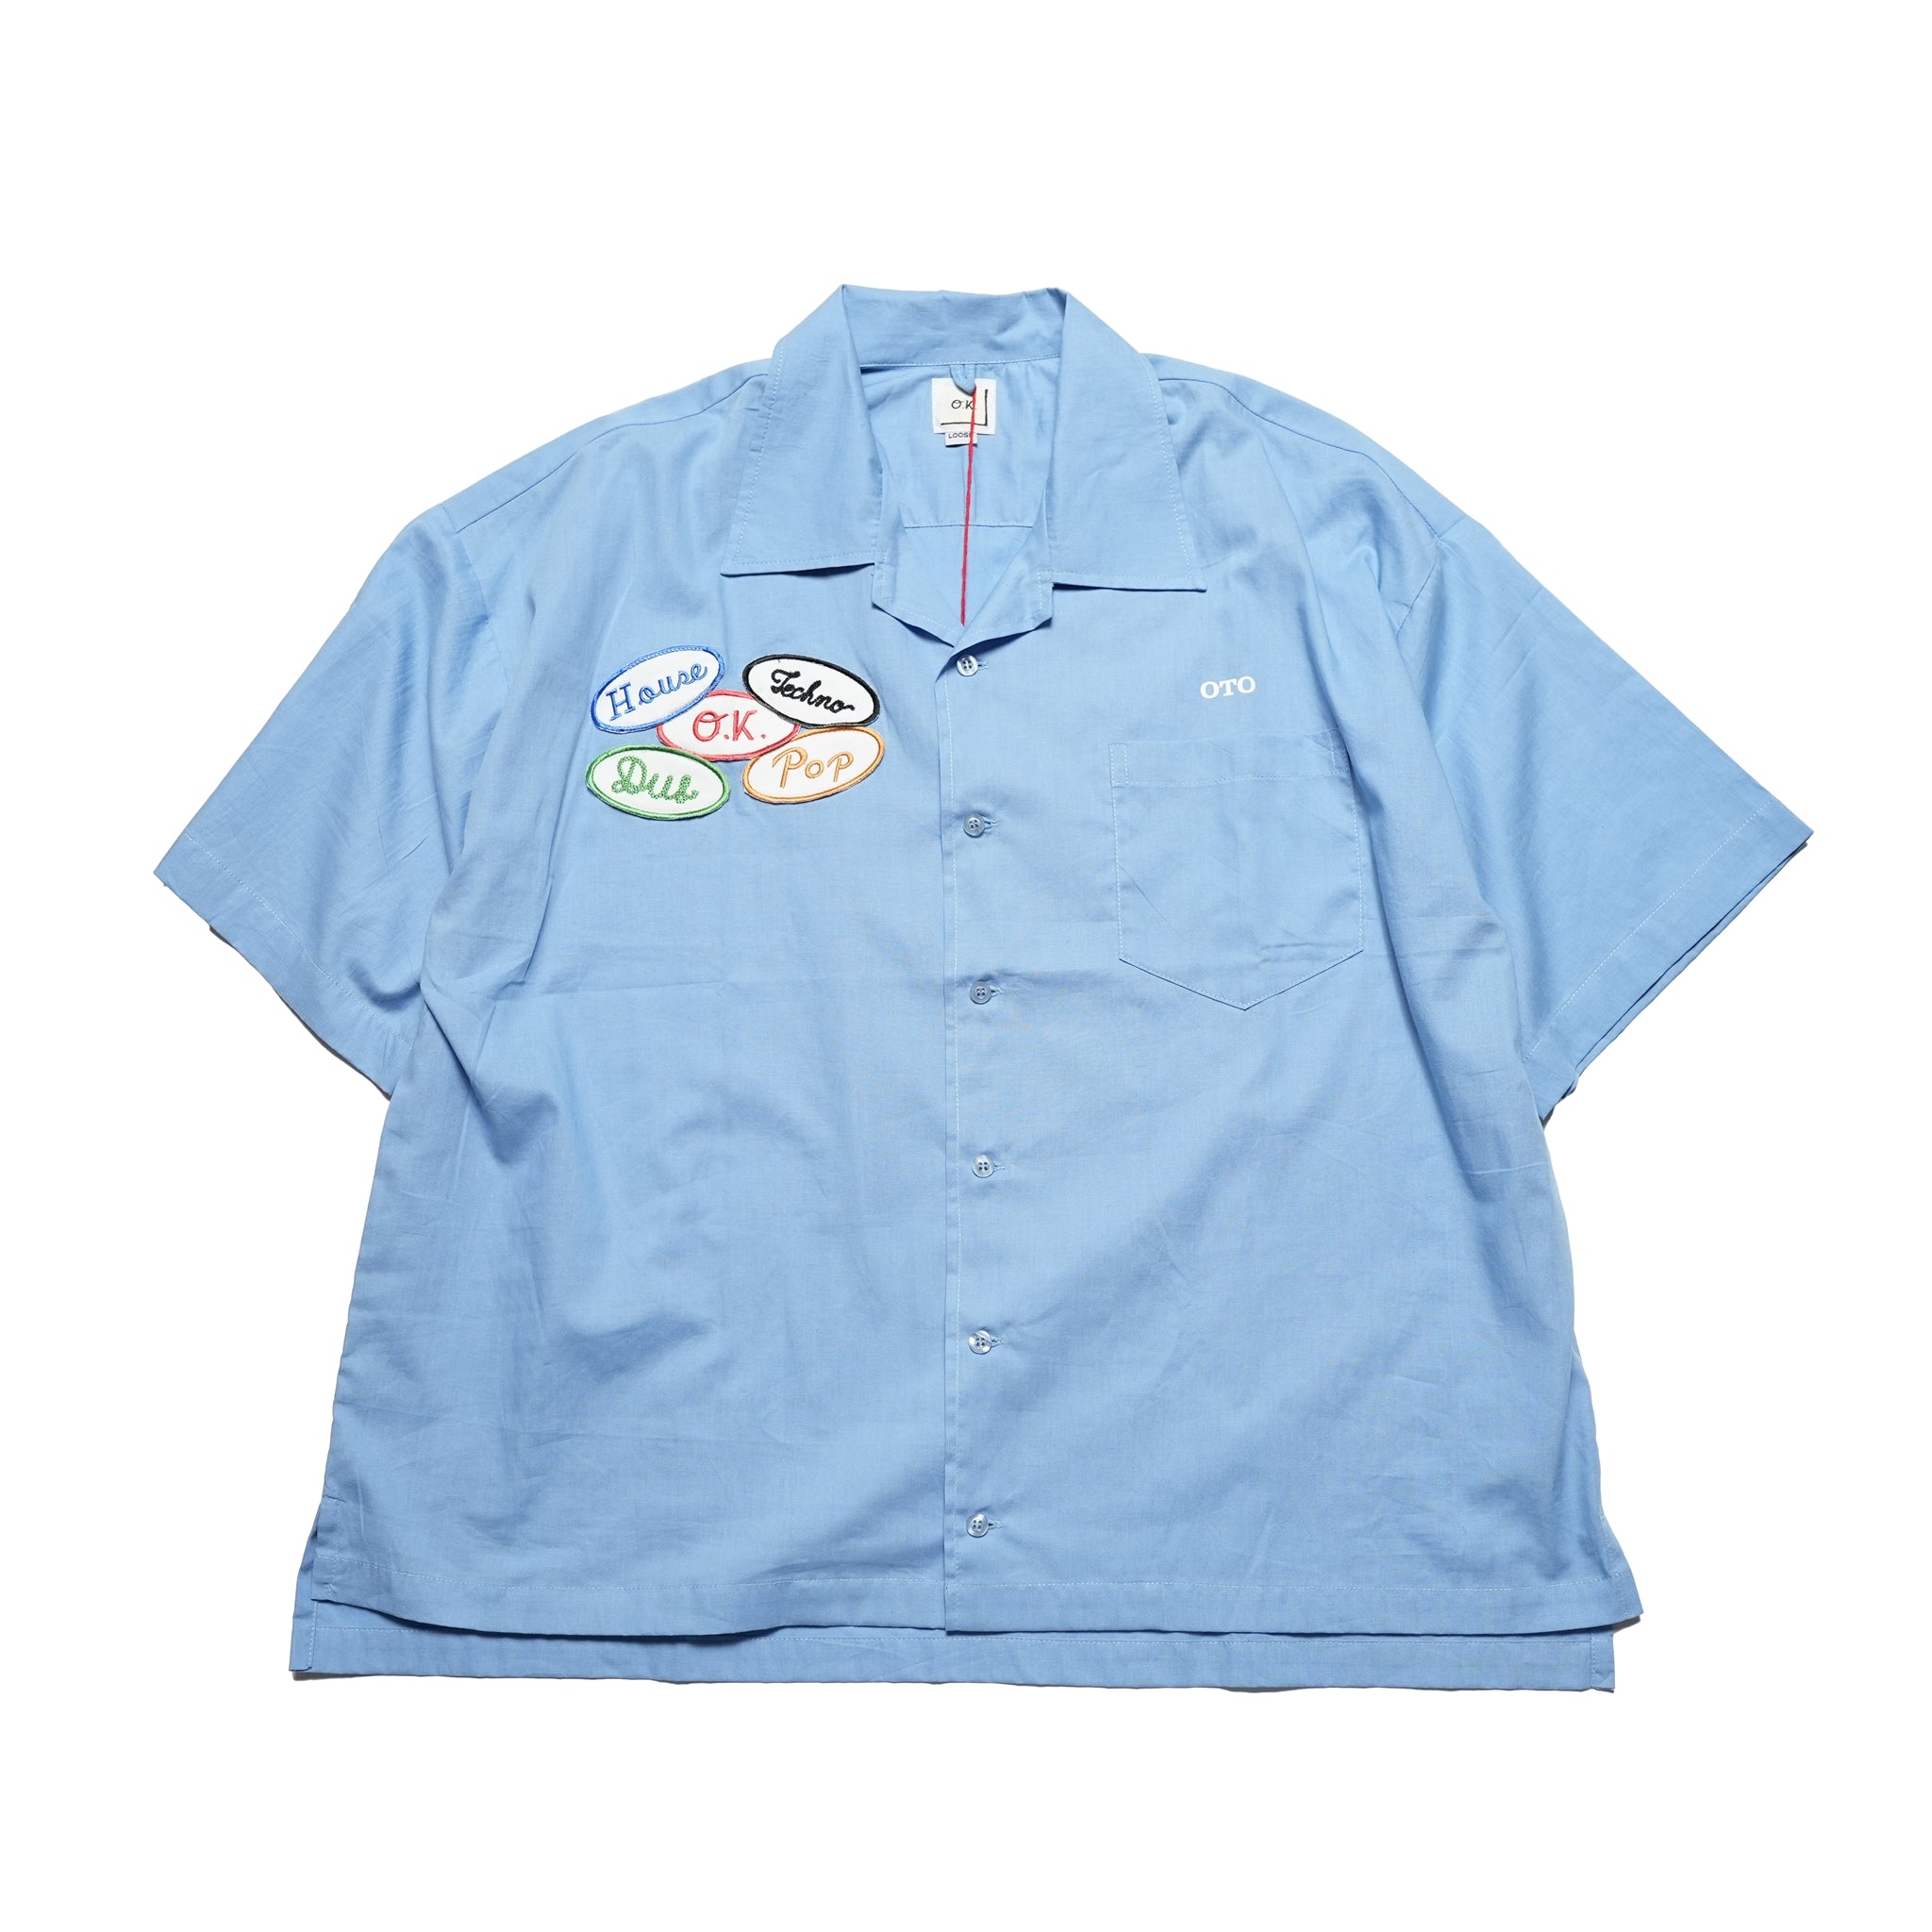 No:ok241-804 | Name:oto shirts | Color:Pink-Loose/Blue-Loose【OK_オーケー】